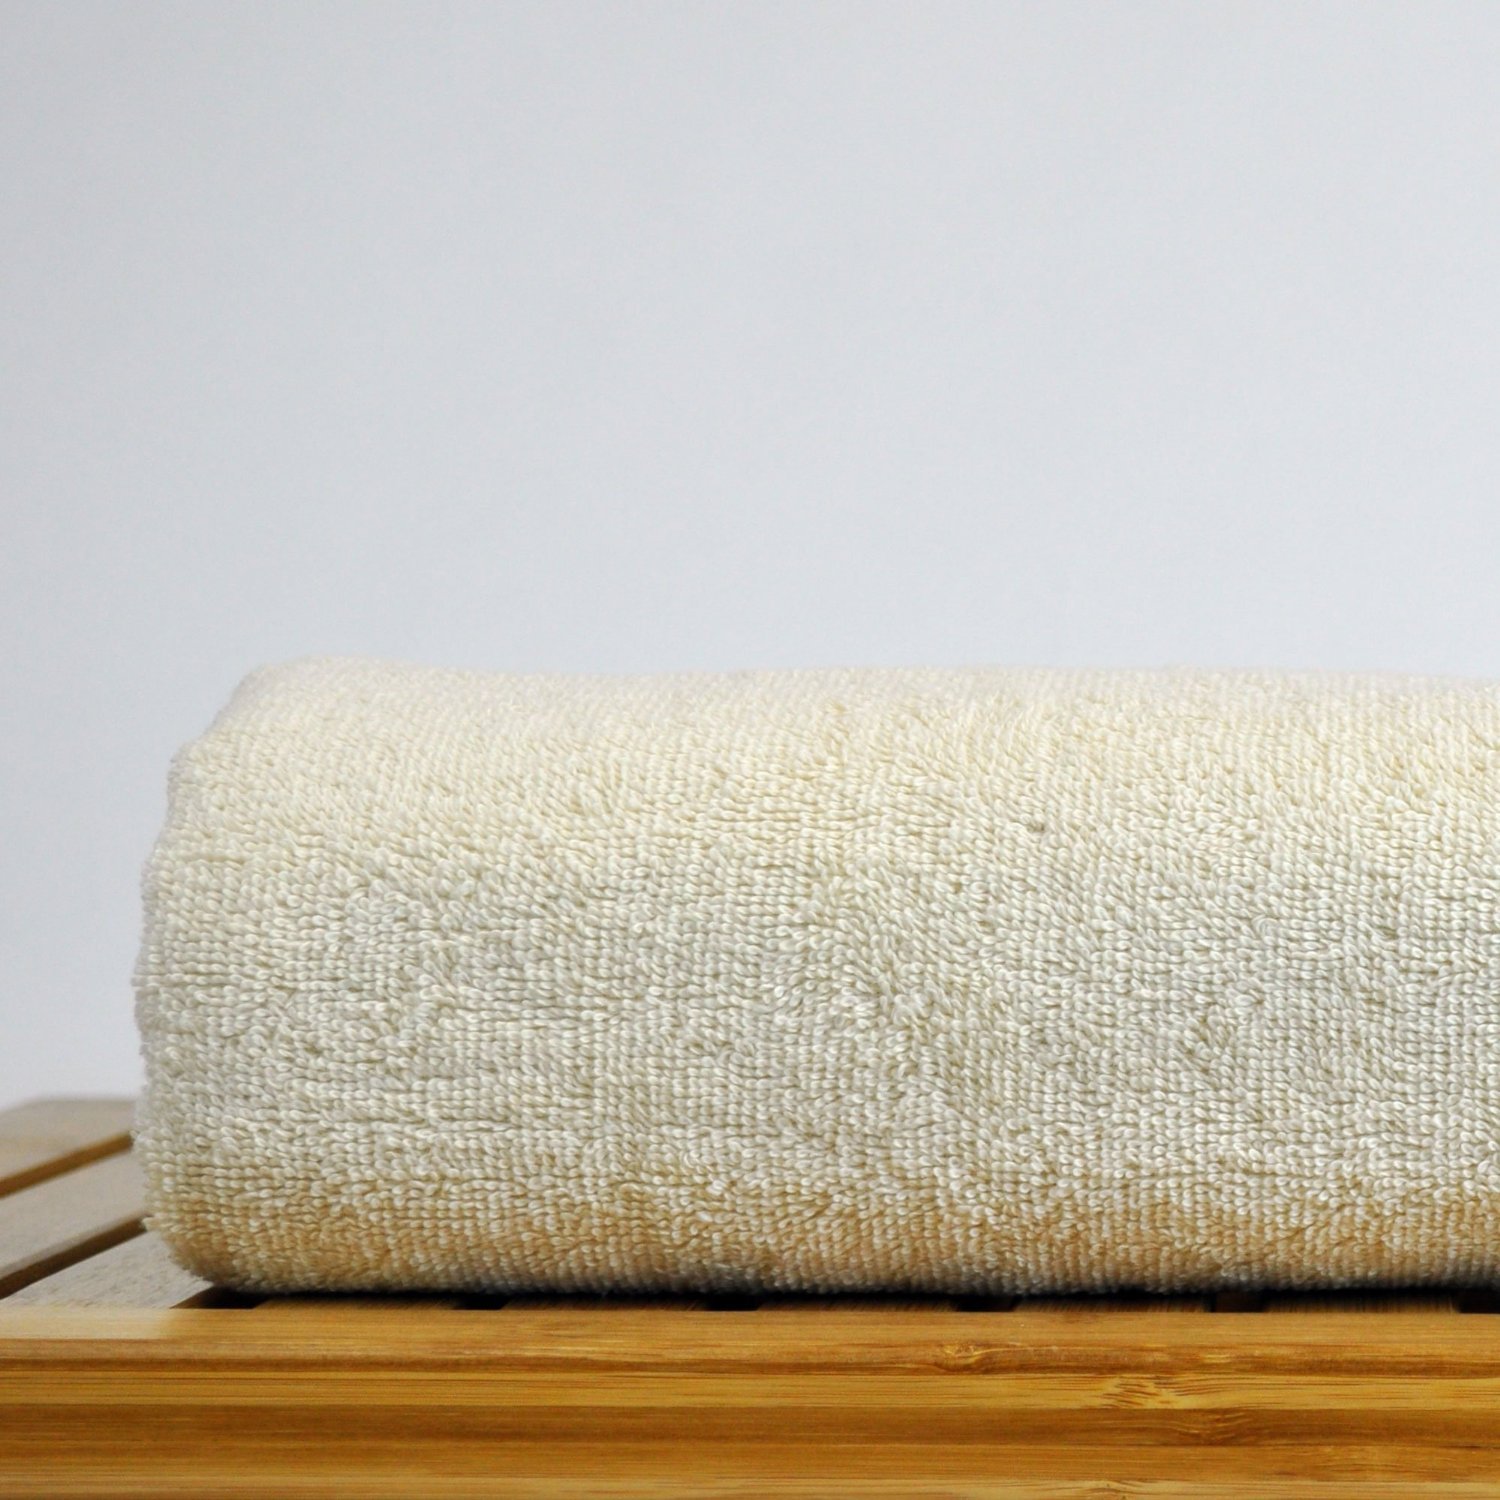 27" x 54" - 17 lbs/doz - %100 Turkish Cotton Beige Bath Towel - Dobby Border-Robemart.com